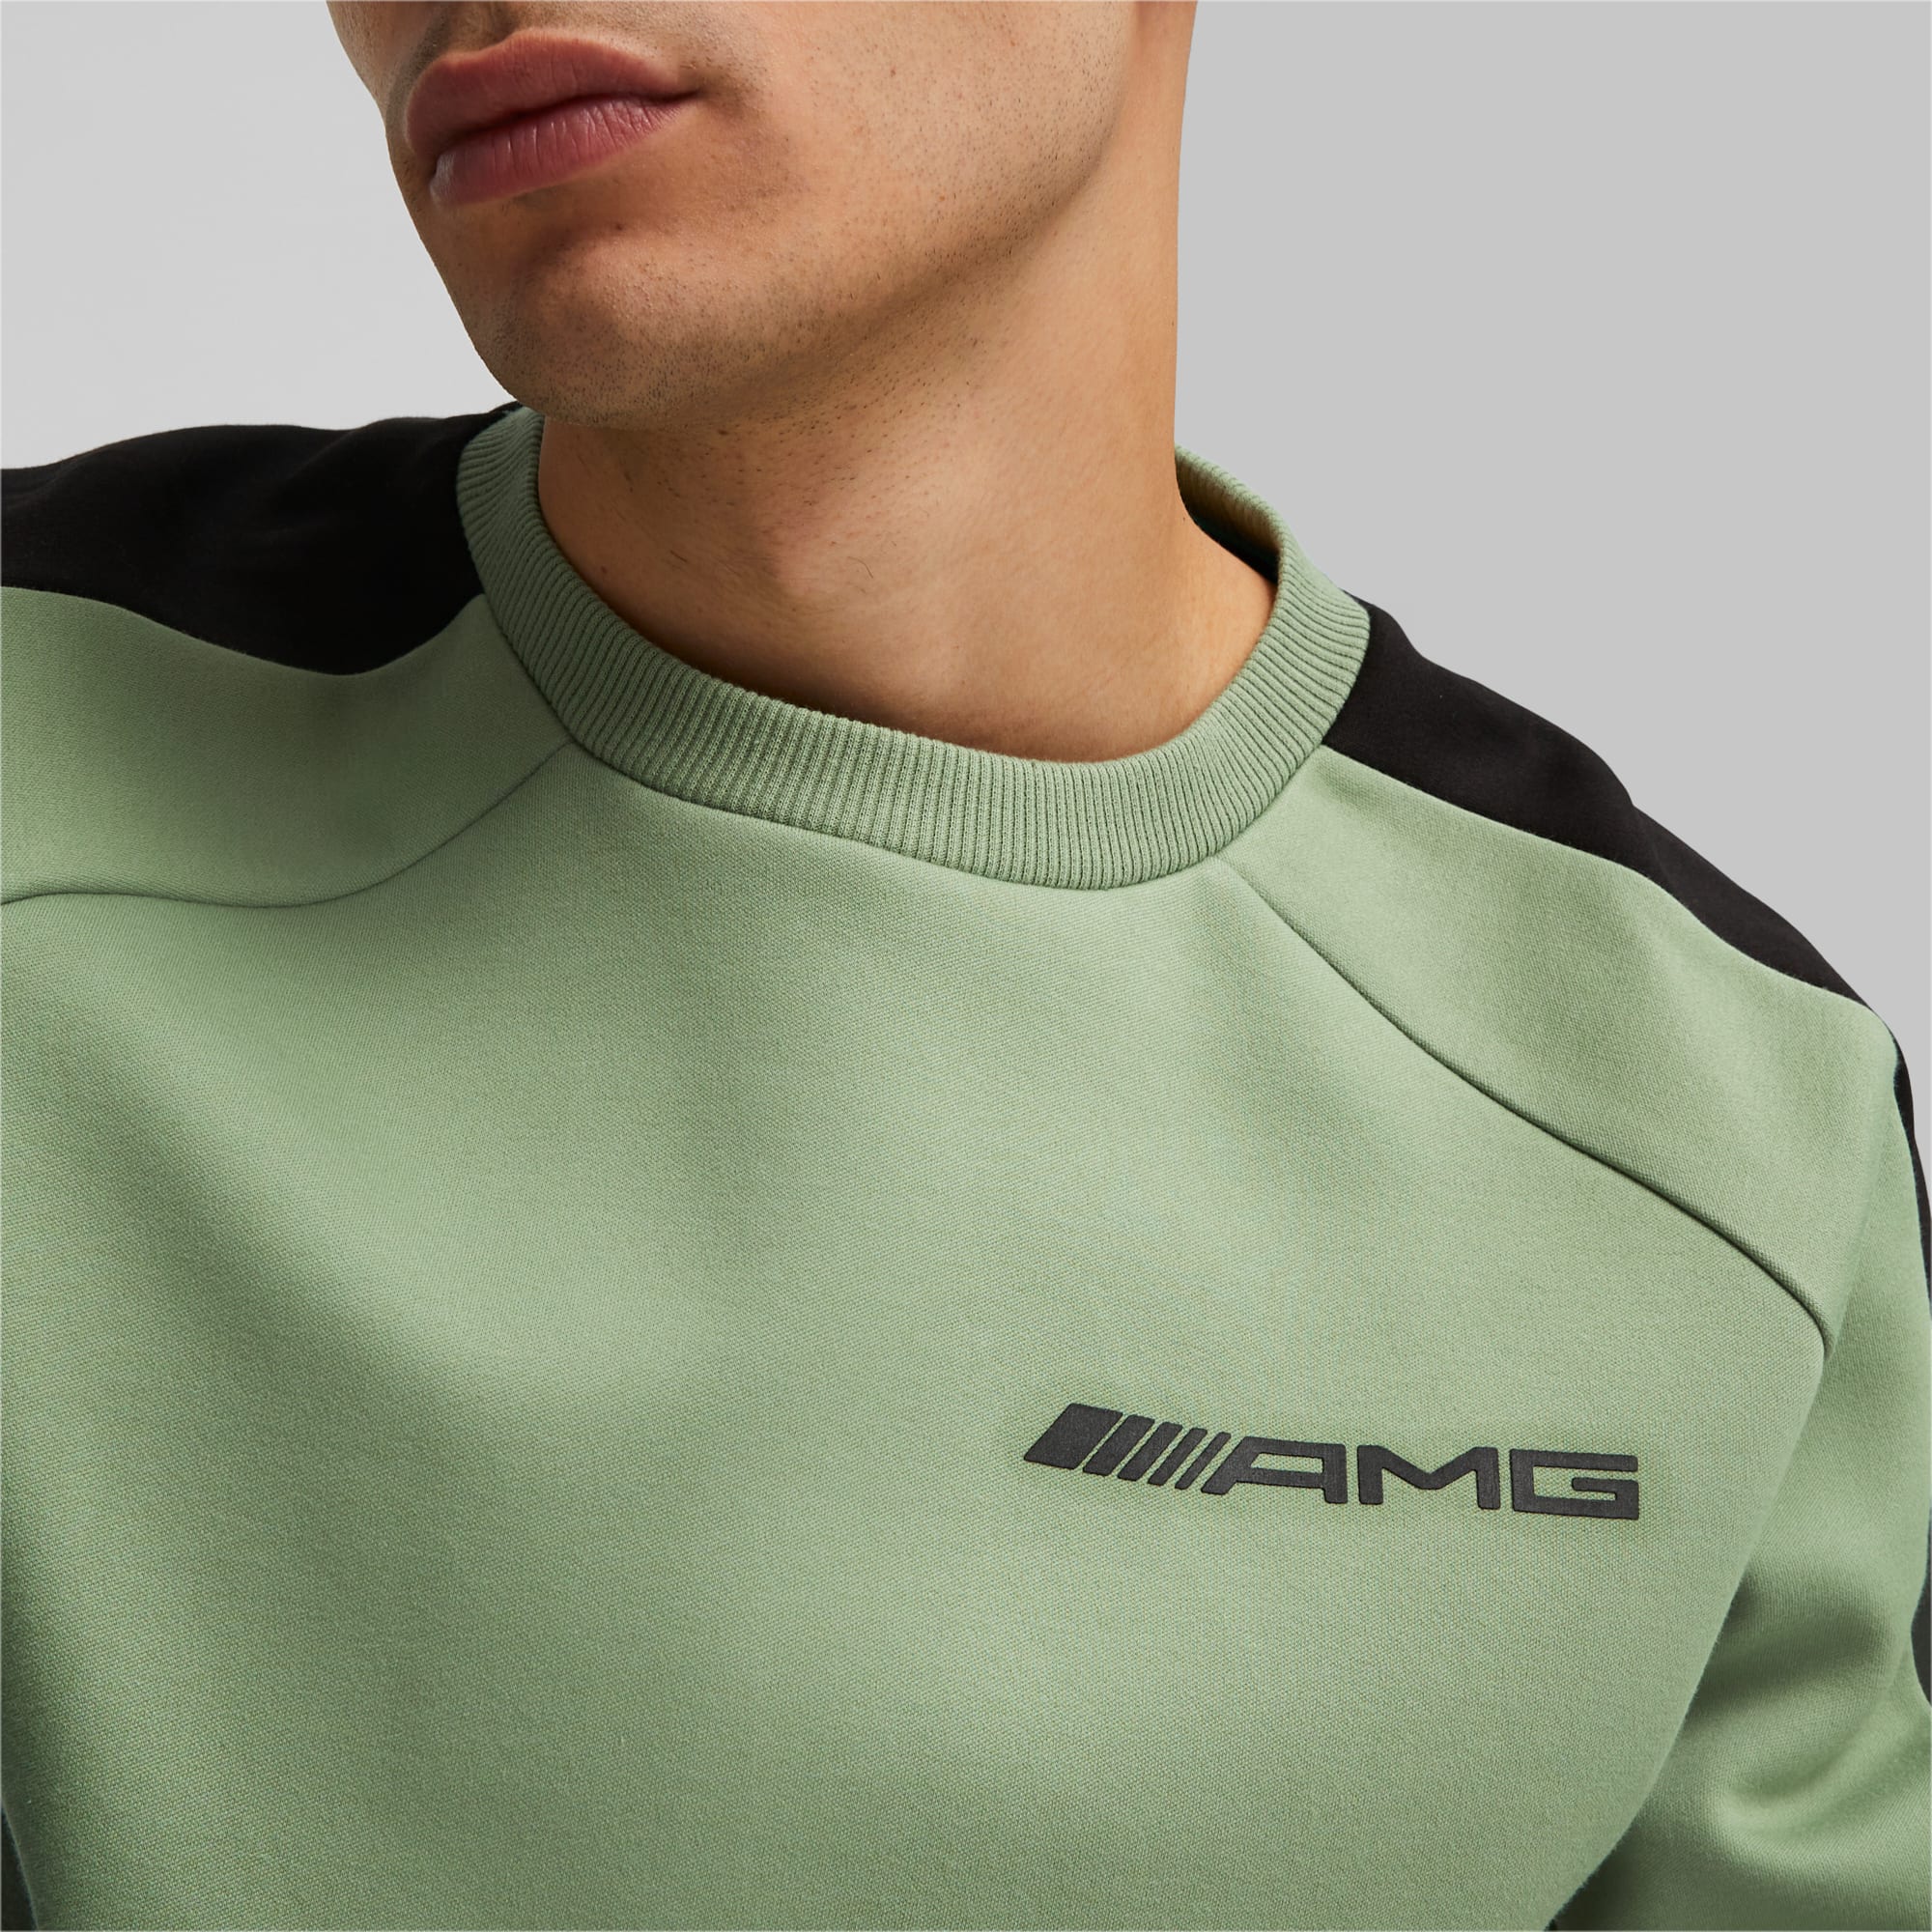 PUMA Mercedes-Amg Men's Sweatshirt, Dusty Green, Size XS, Clothing